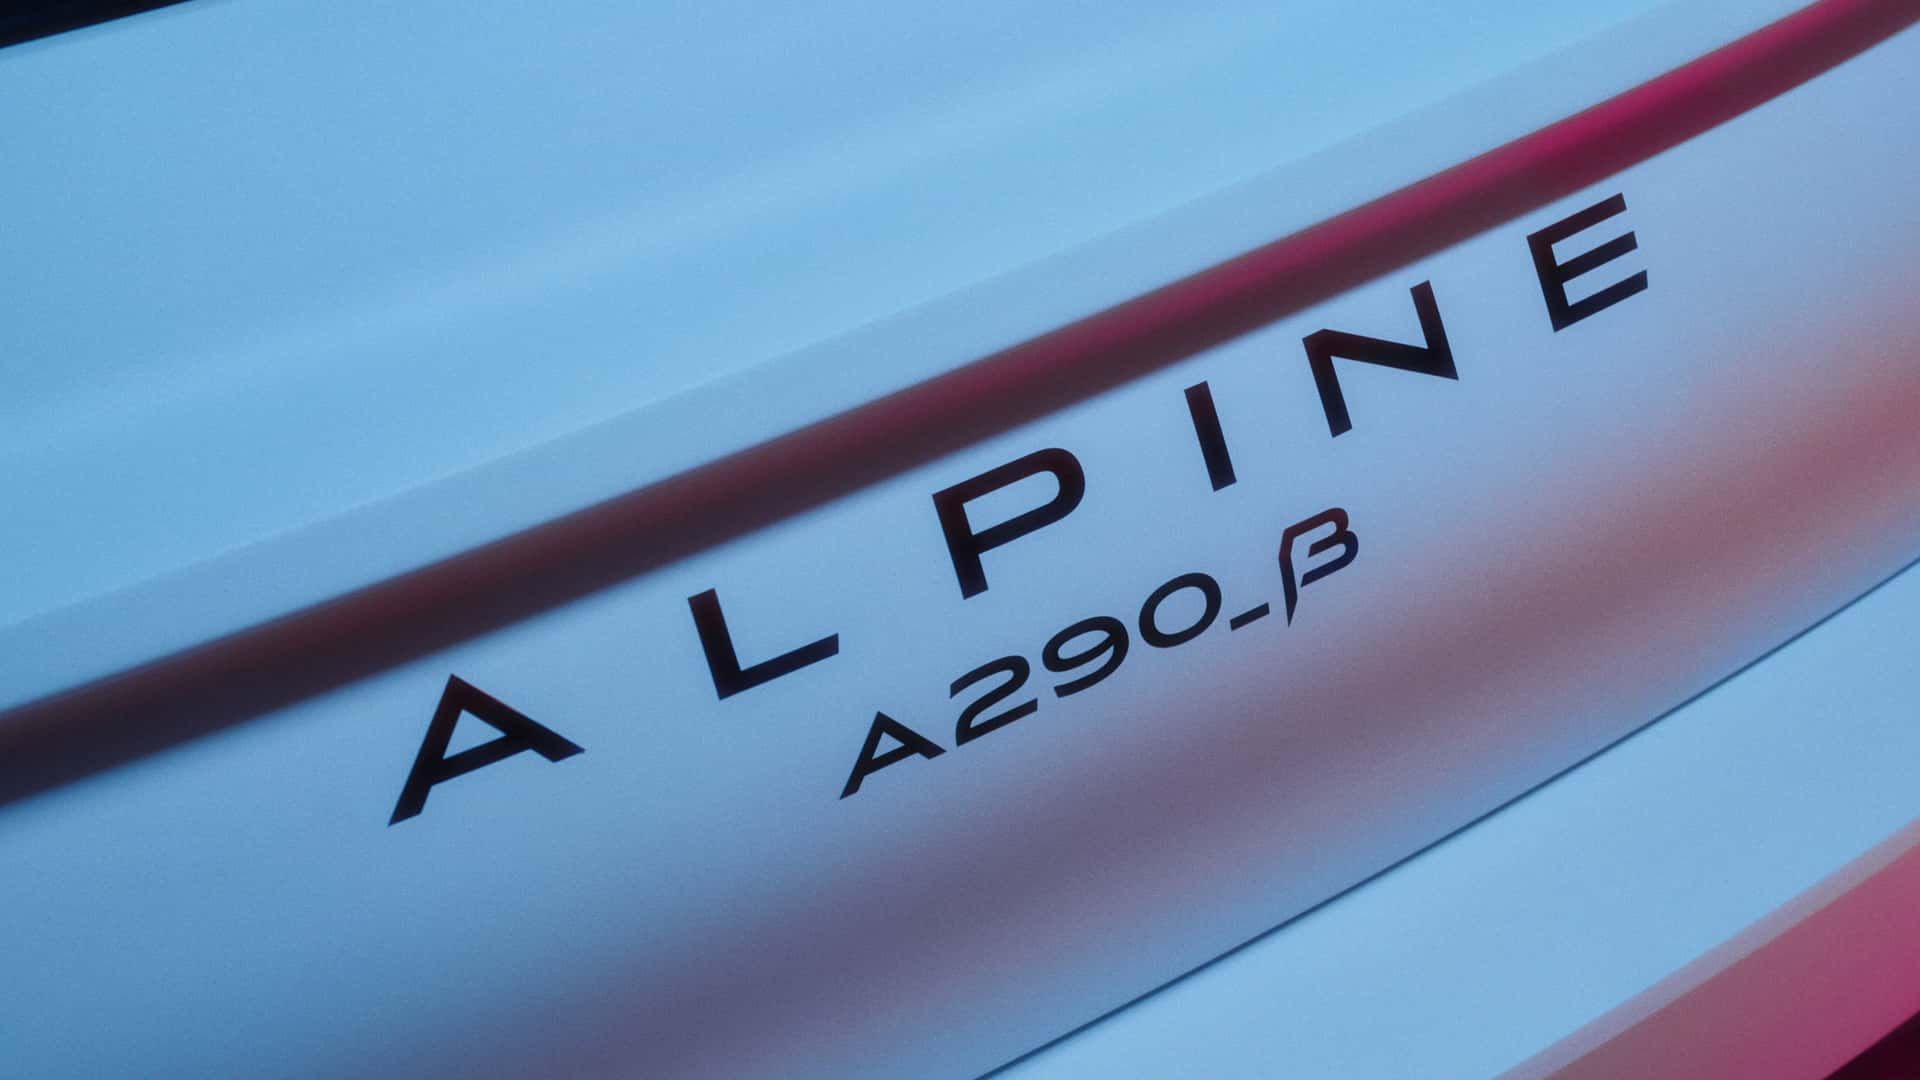 alpine-a290-beta-teaser.jpg